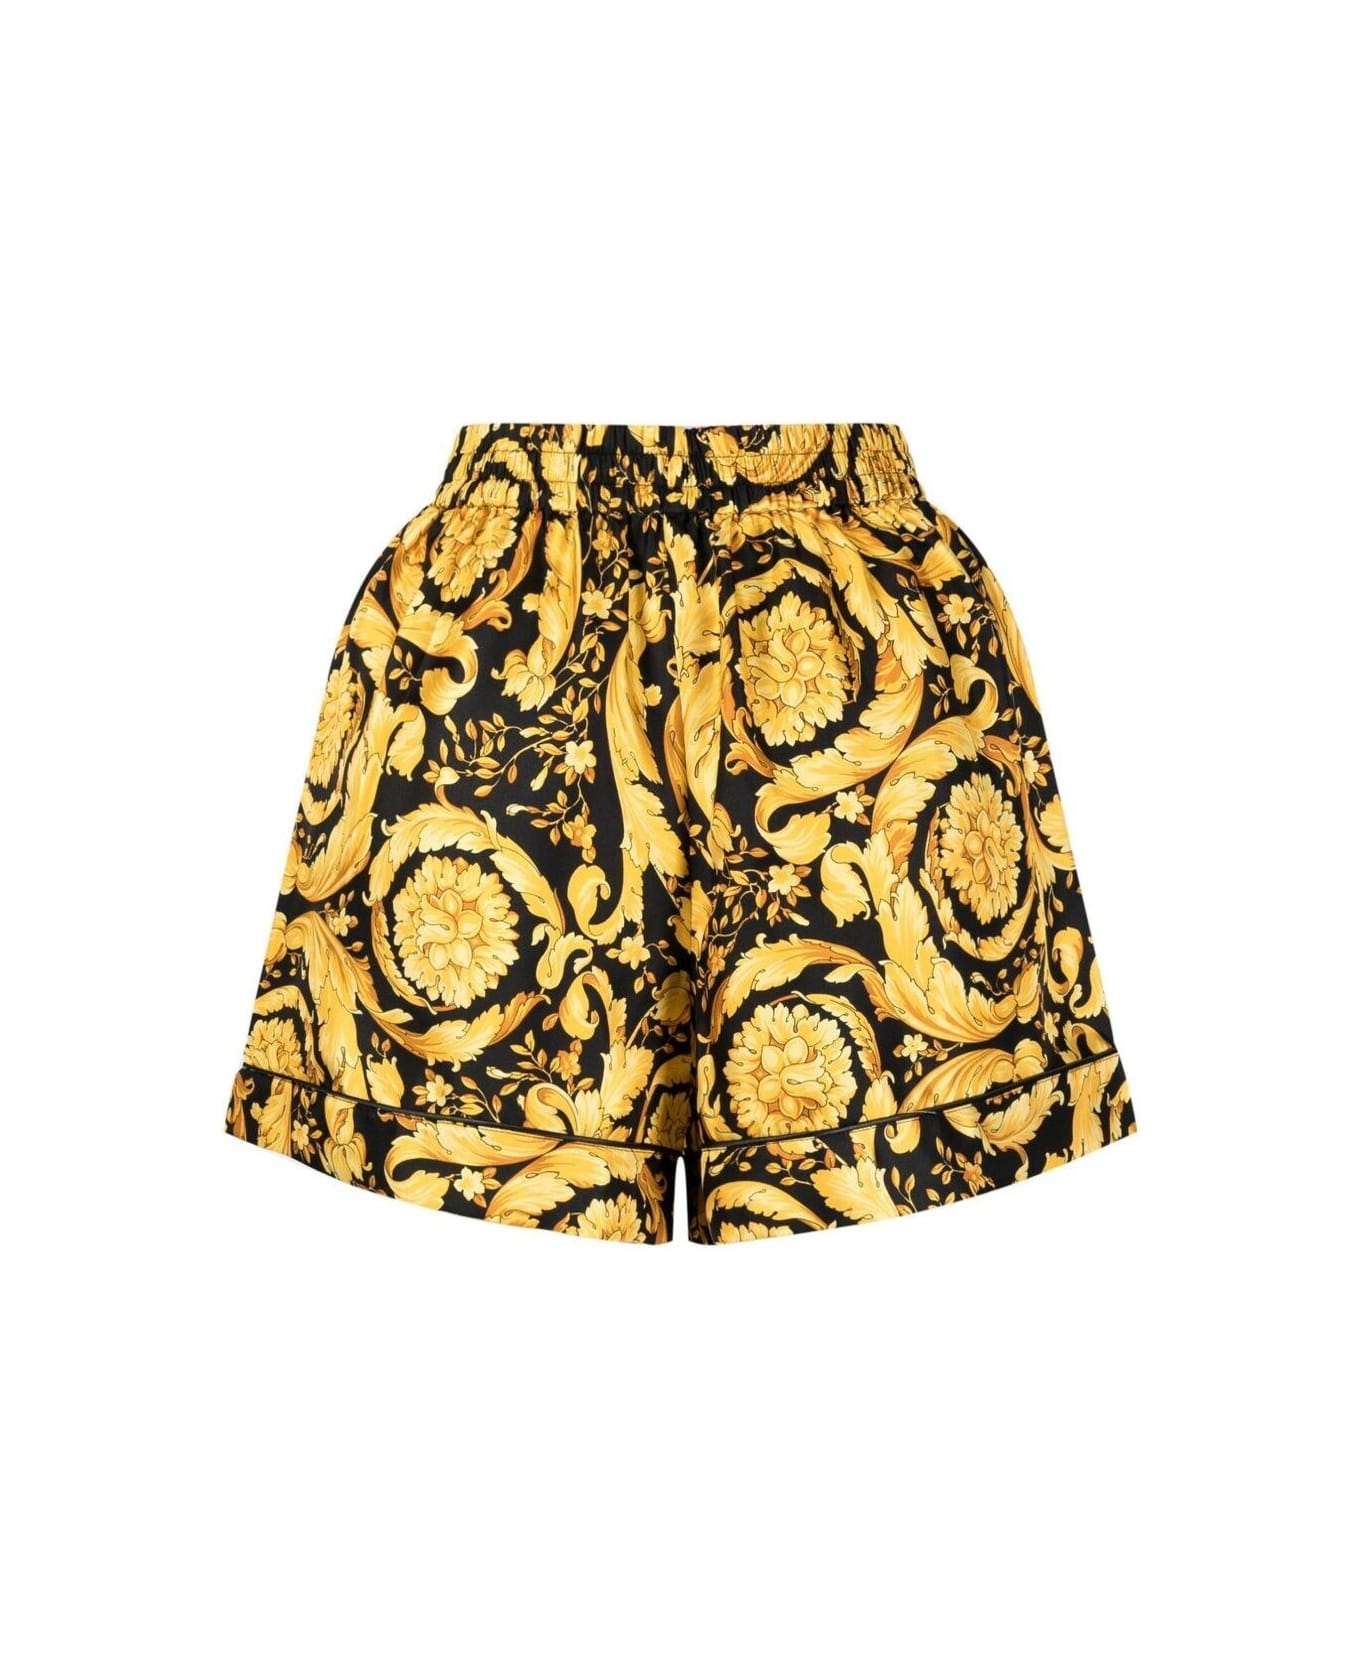 Versace Shorts - Gold